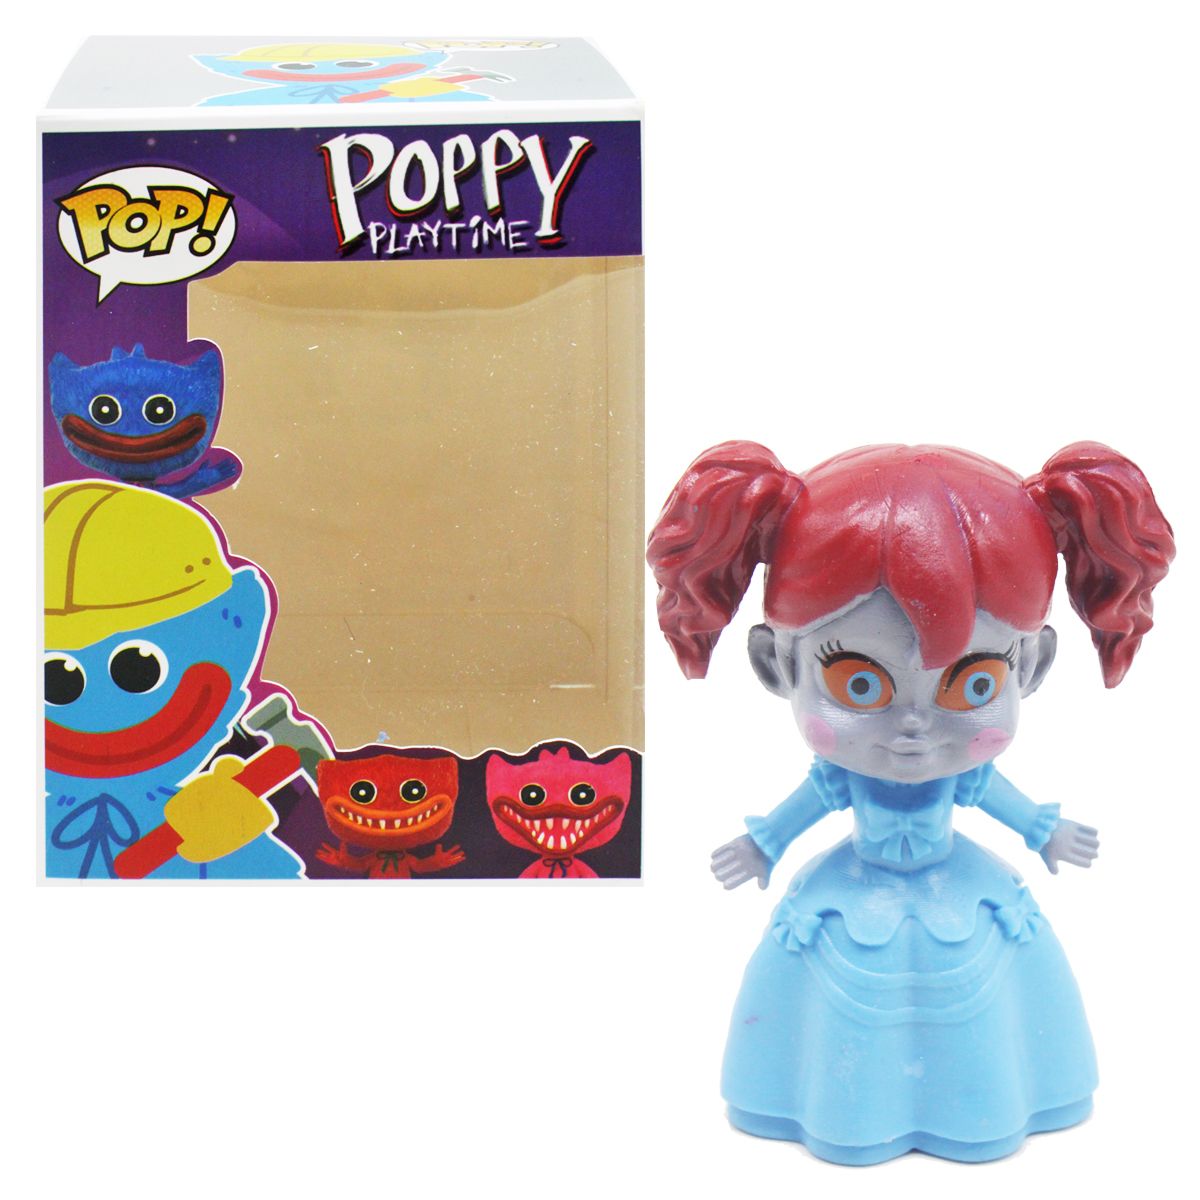 Фигурка "Poppy Playtime: Doll", маленькая